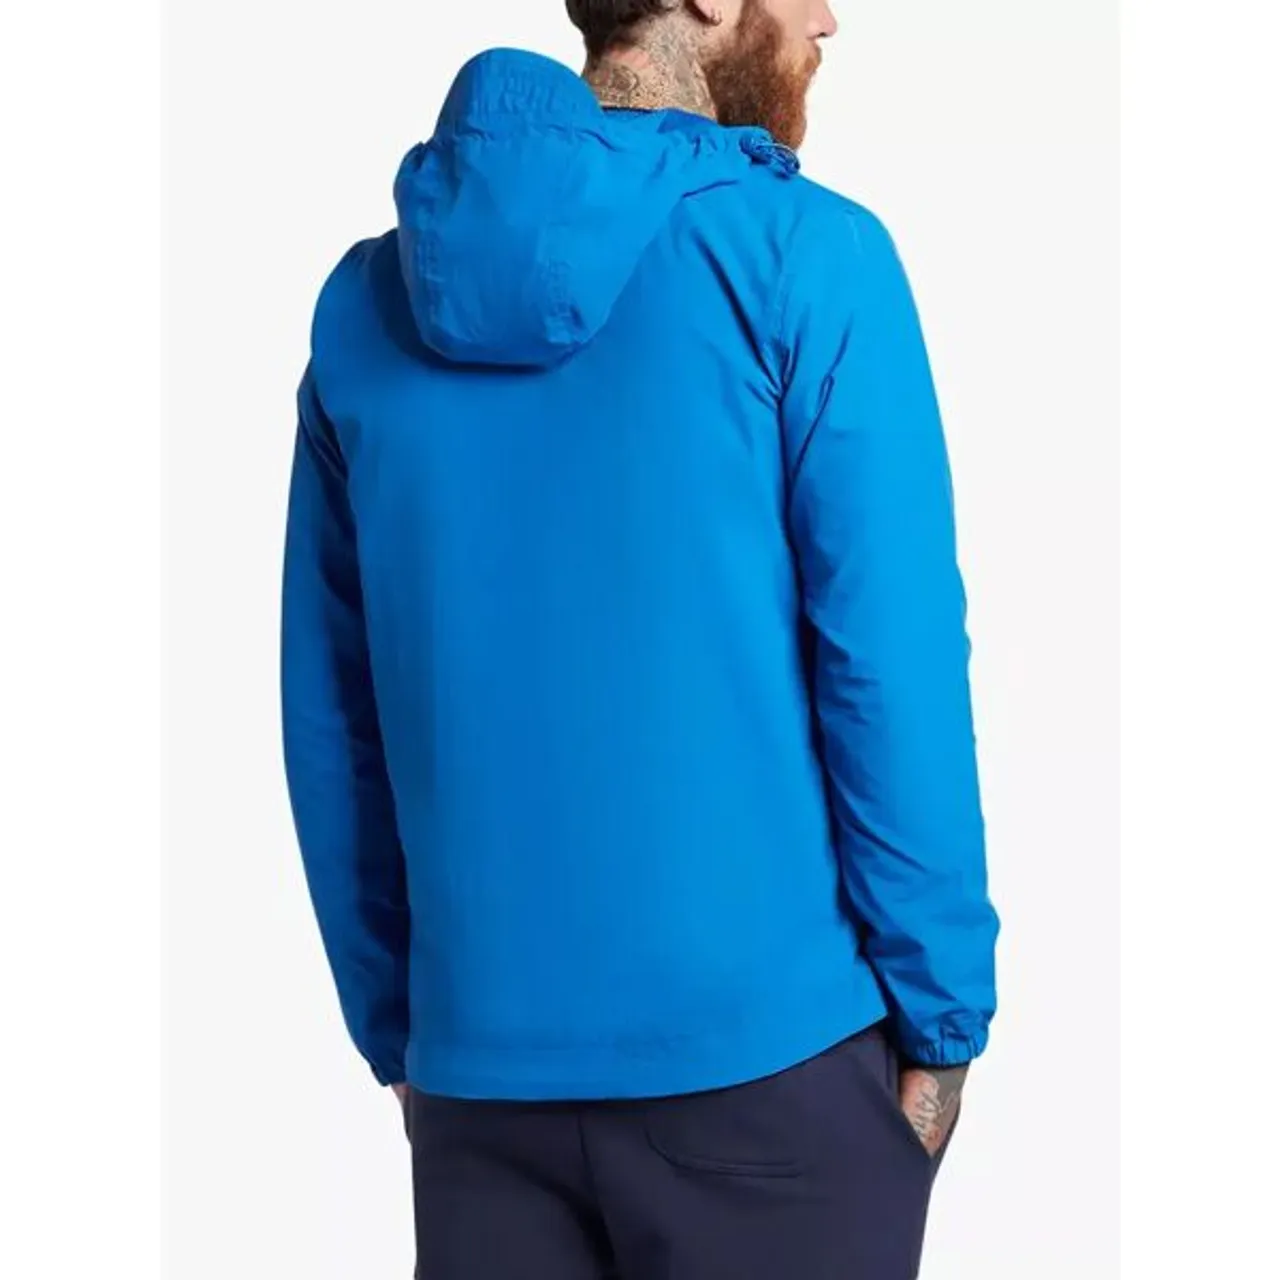 Lyle & Scott Zip Through Hooded Jacket, Bright Blue - Bright Blue - Male